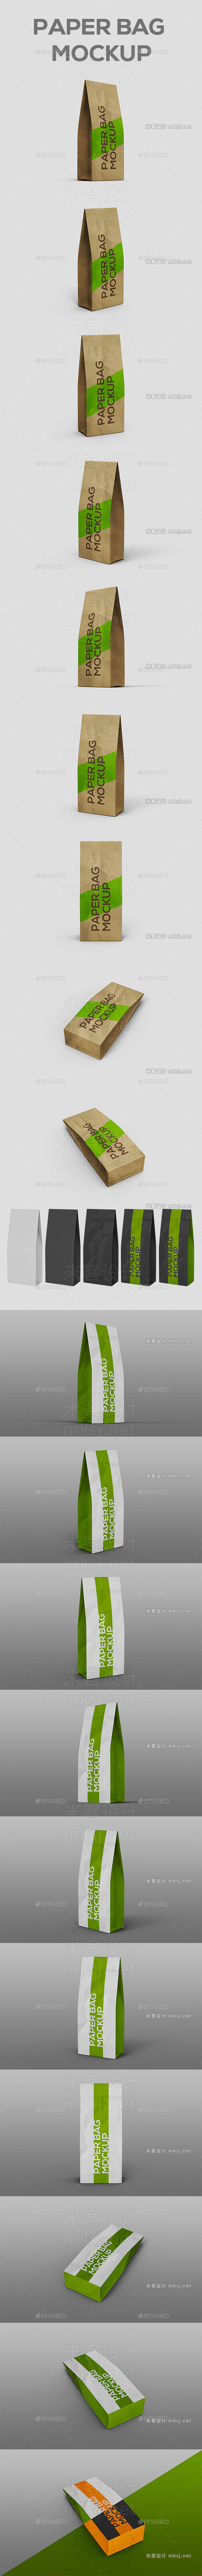 VI贴图 人字顶角零食小吃纸袋品牌包装设计mockup样机PSD模板